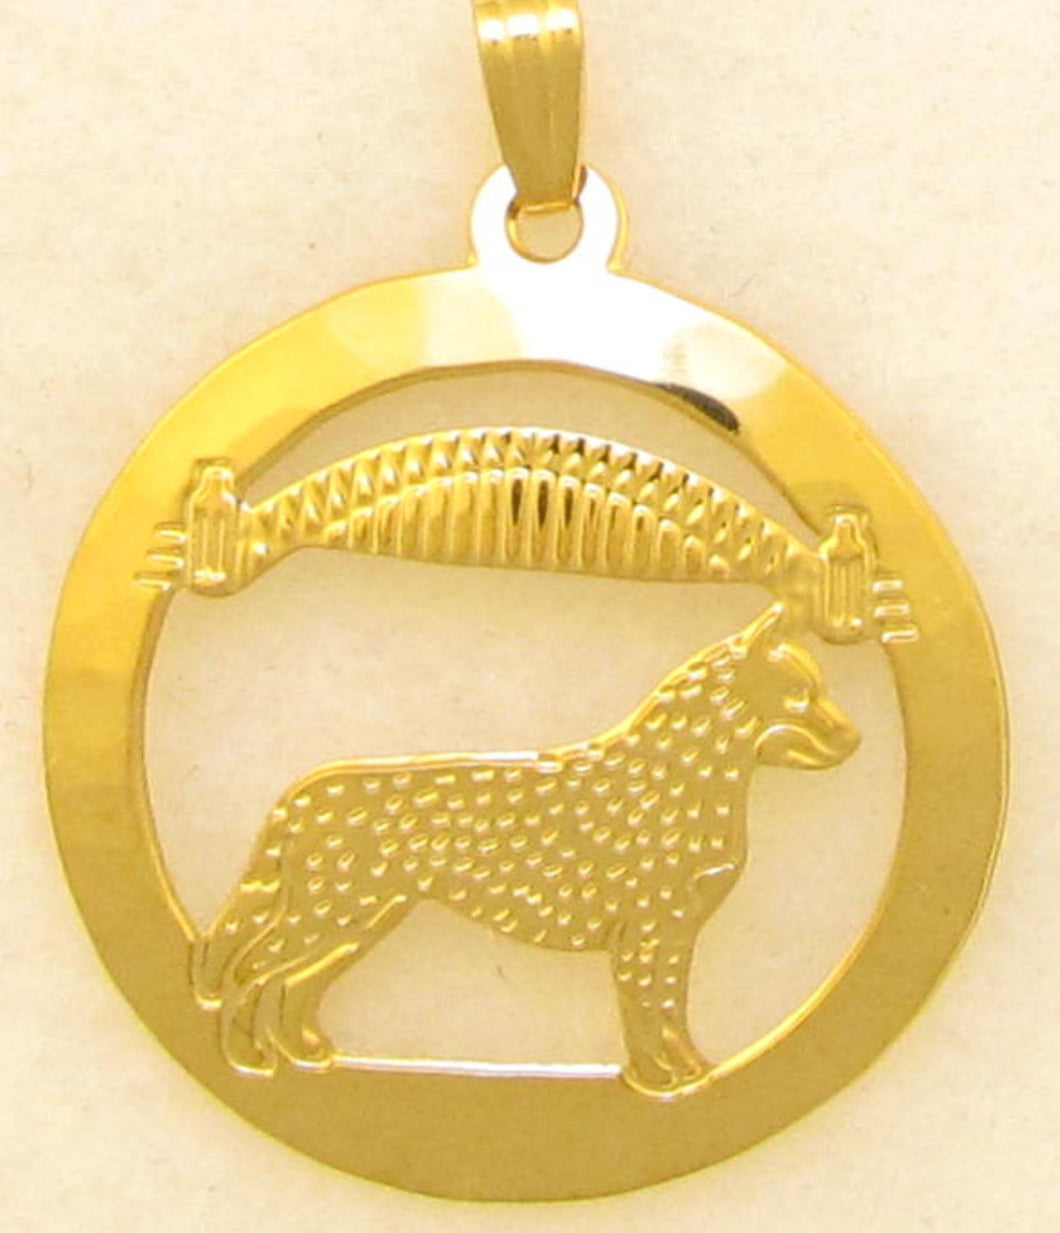 Australian Cattle Dog Pendant by Touchstone Dog Designs // Australian Cattle Dog Jewelry  // Dog Breed Jewelry